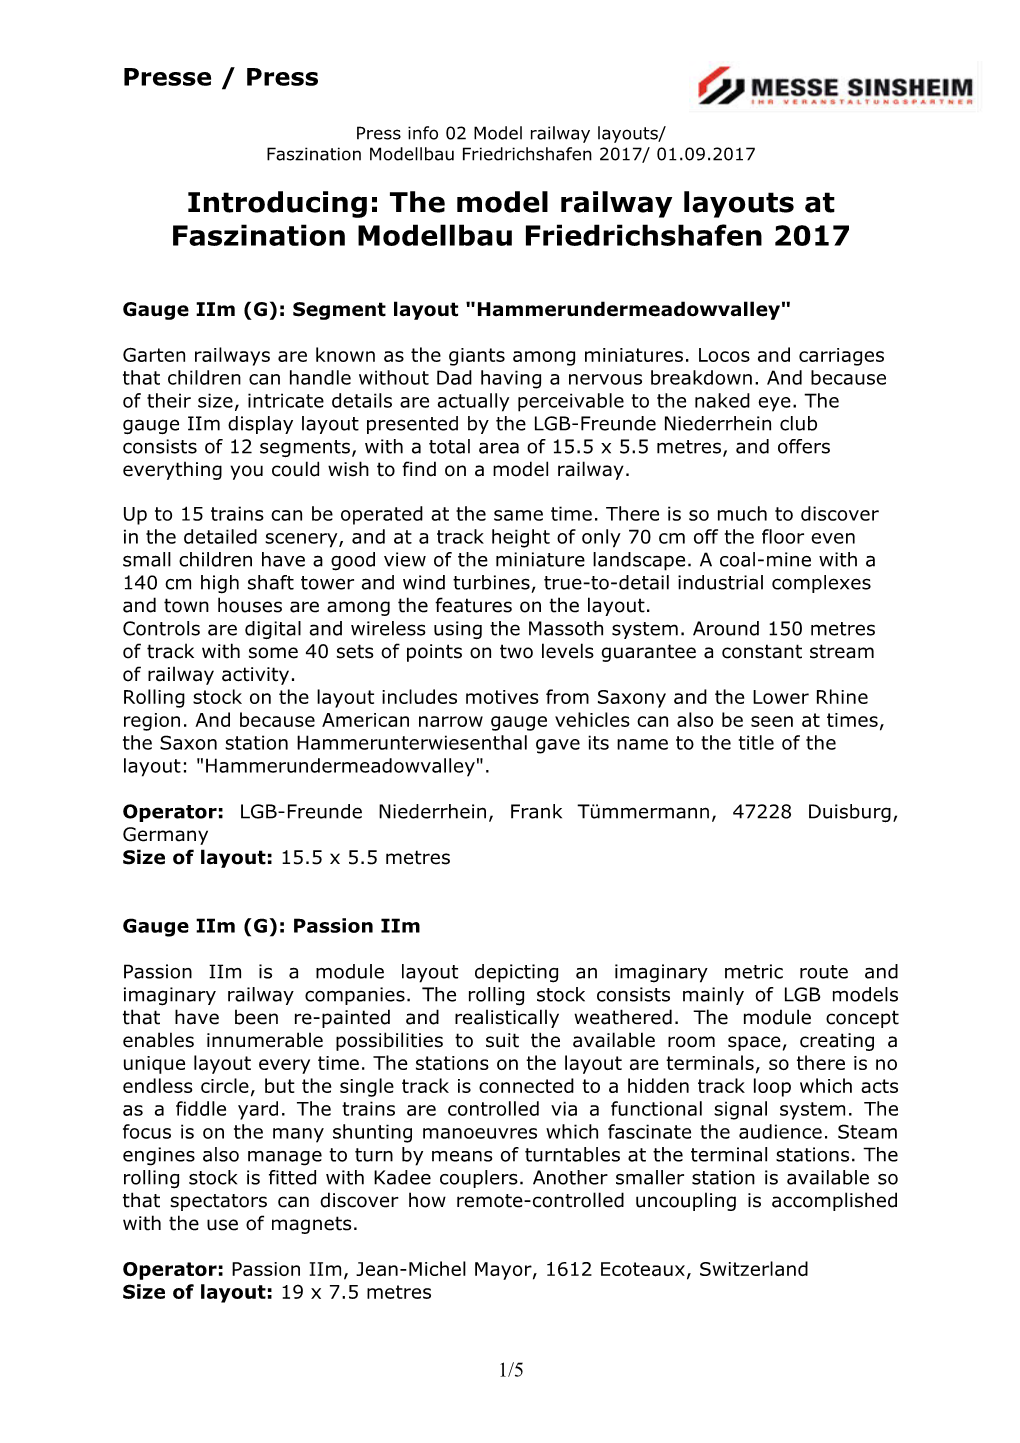 Introducing: Themodel Railway Layouts Atfaszination Modellbau Friedrichshafen 2017